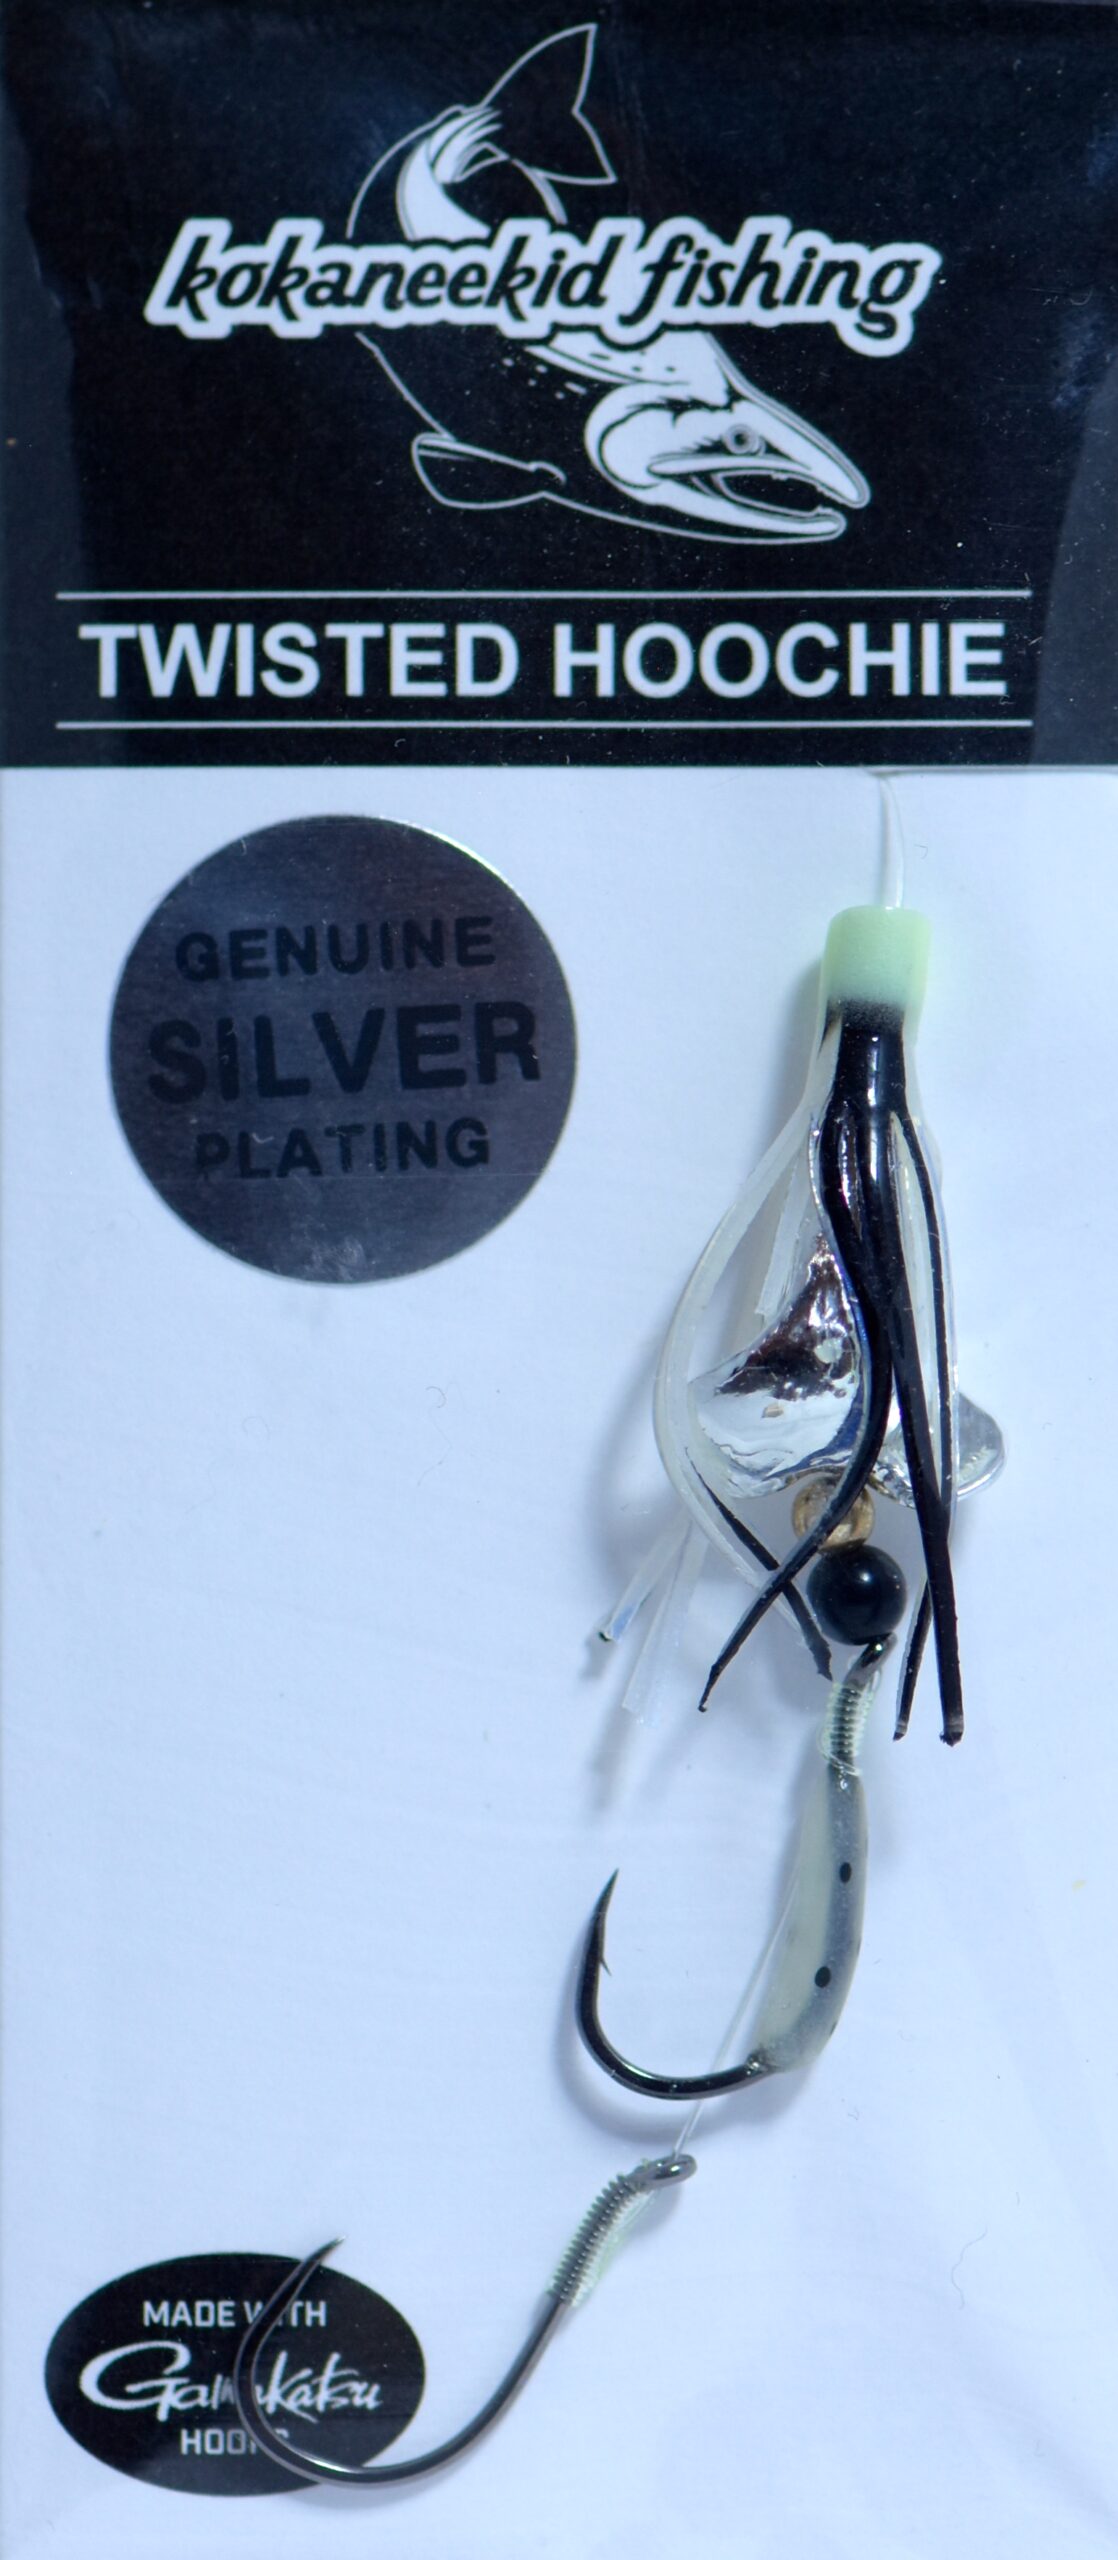 https://www.kokaneekidfishing.com/wp-content/uploads/2019/03/TH-Glow-White-Black-Silver-scaled.jpg